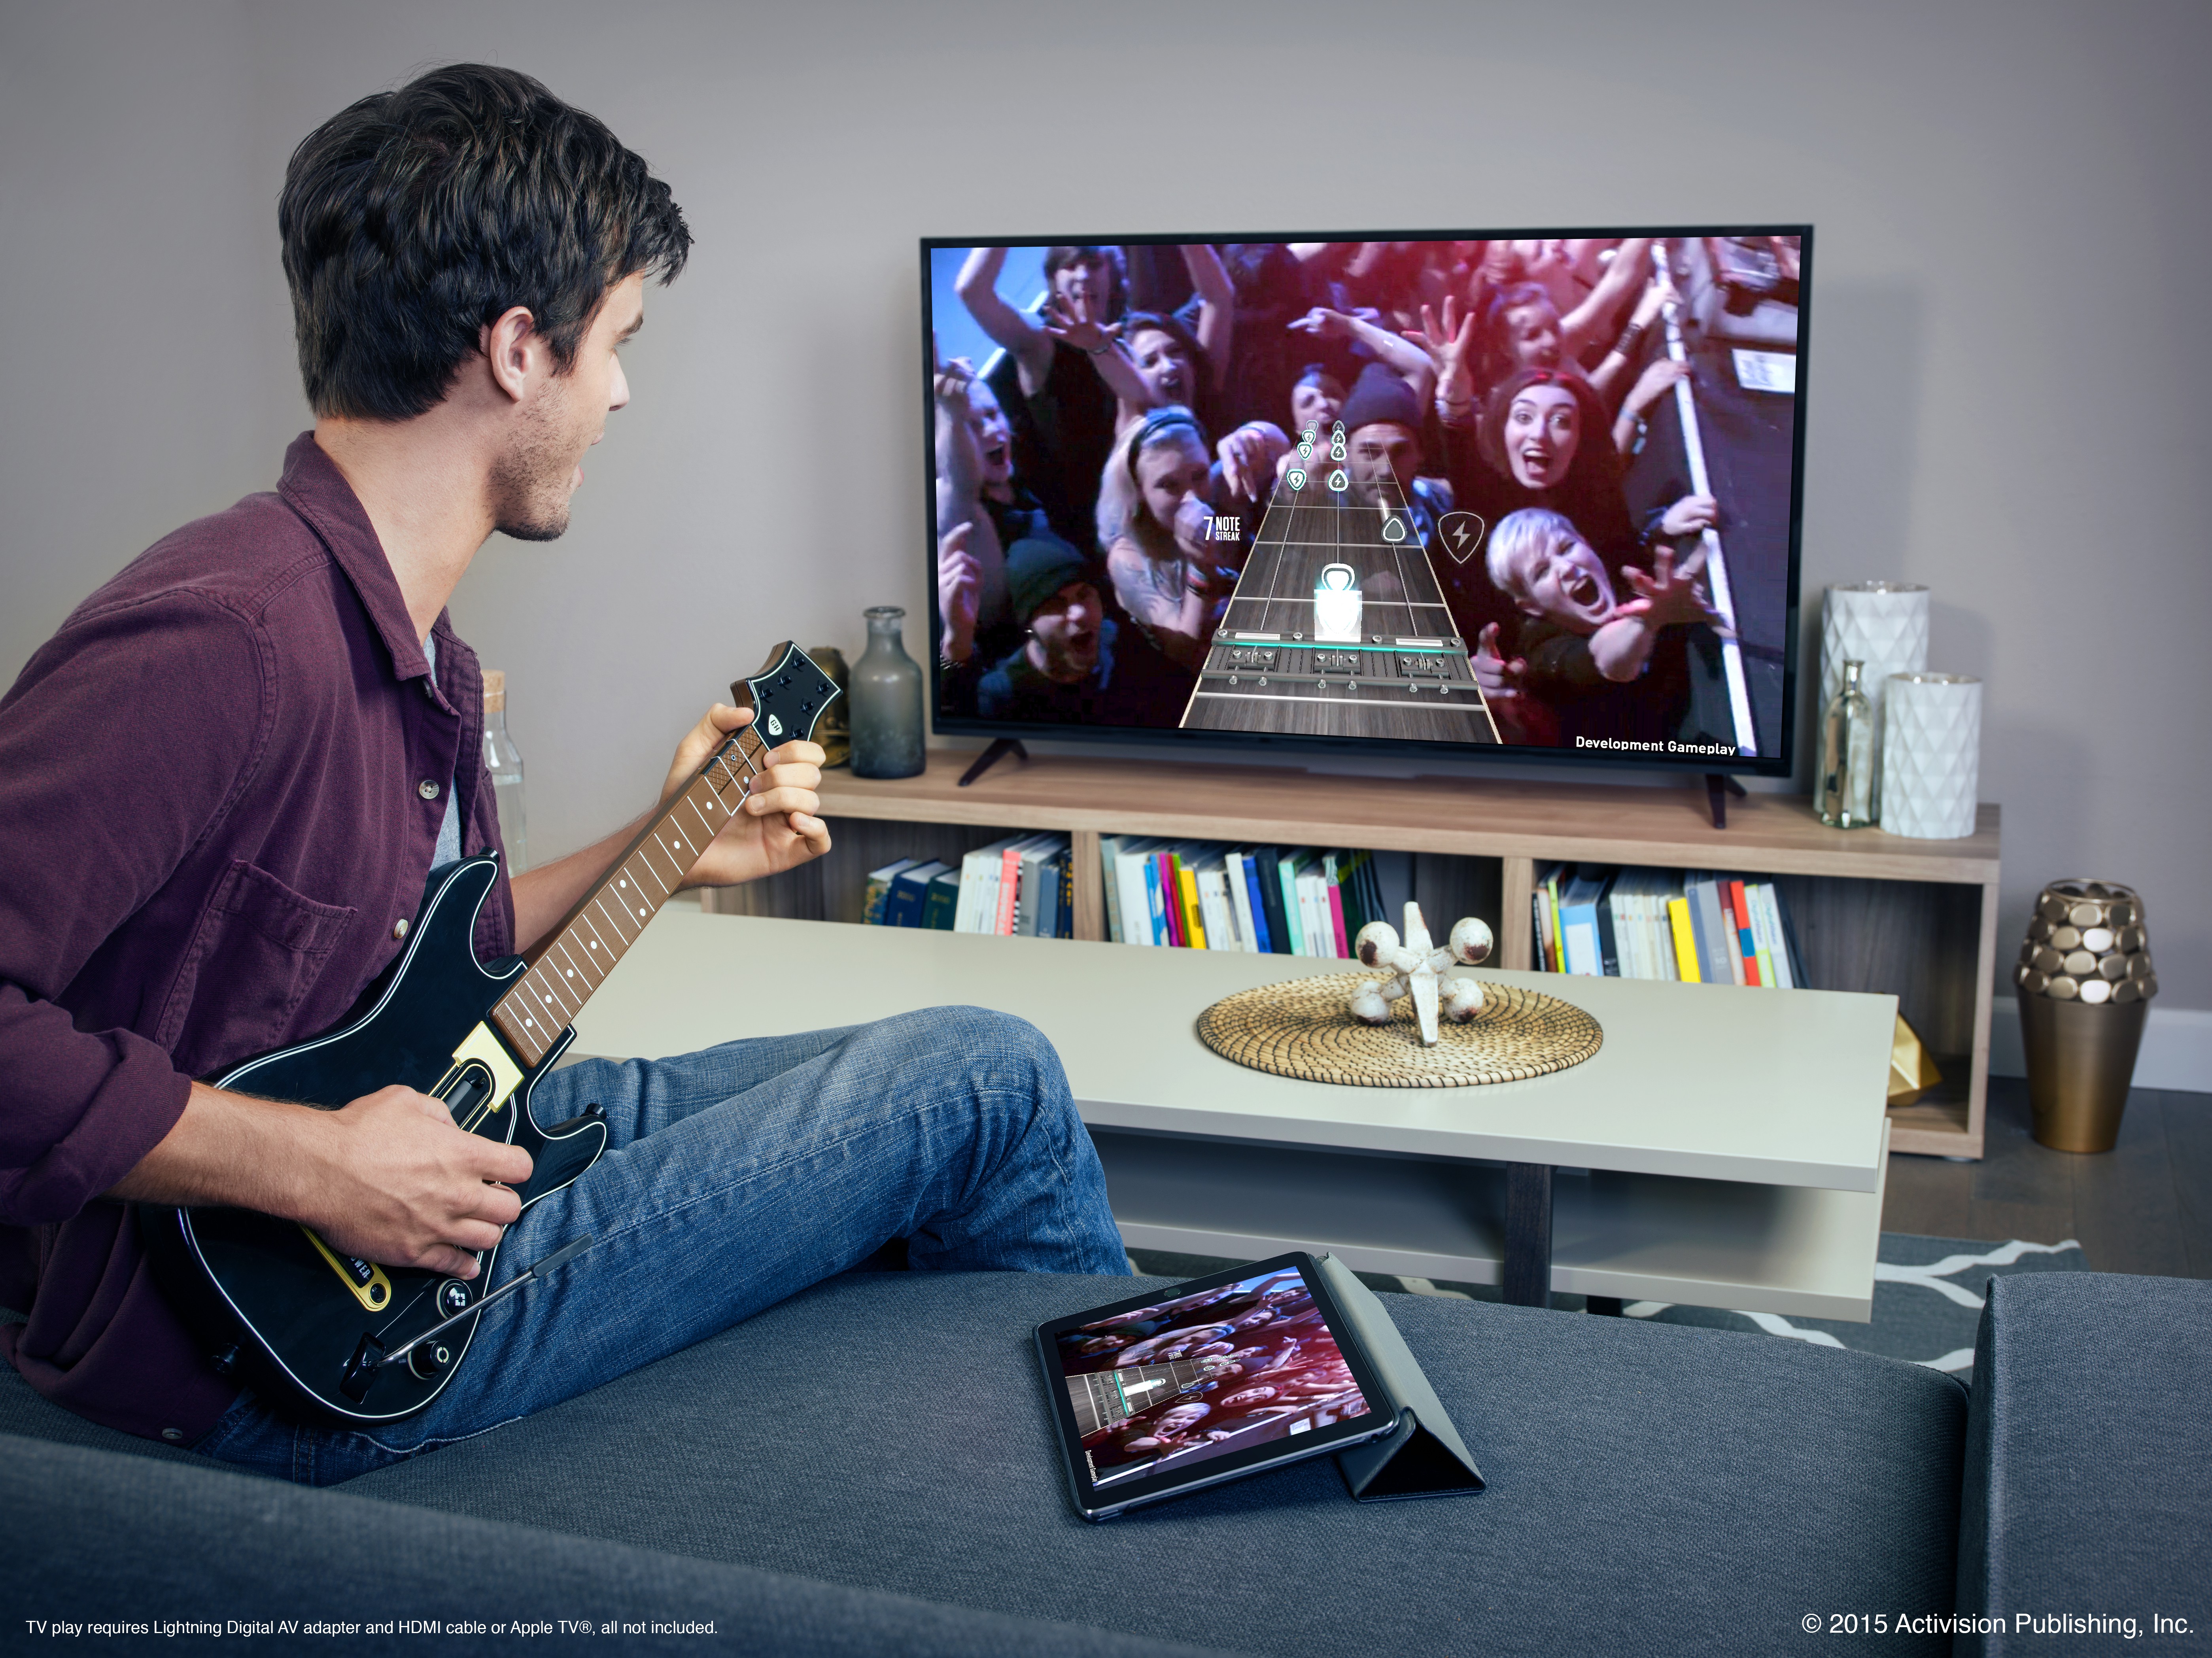 Поиграем в игру на телевизоре. Guitar Hero. Играет в приставку. Человек играет в приставку. Люди играющие в приставку.